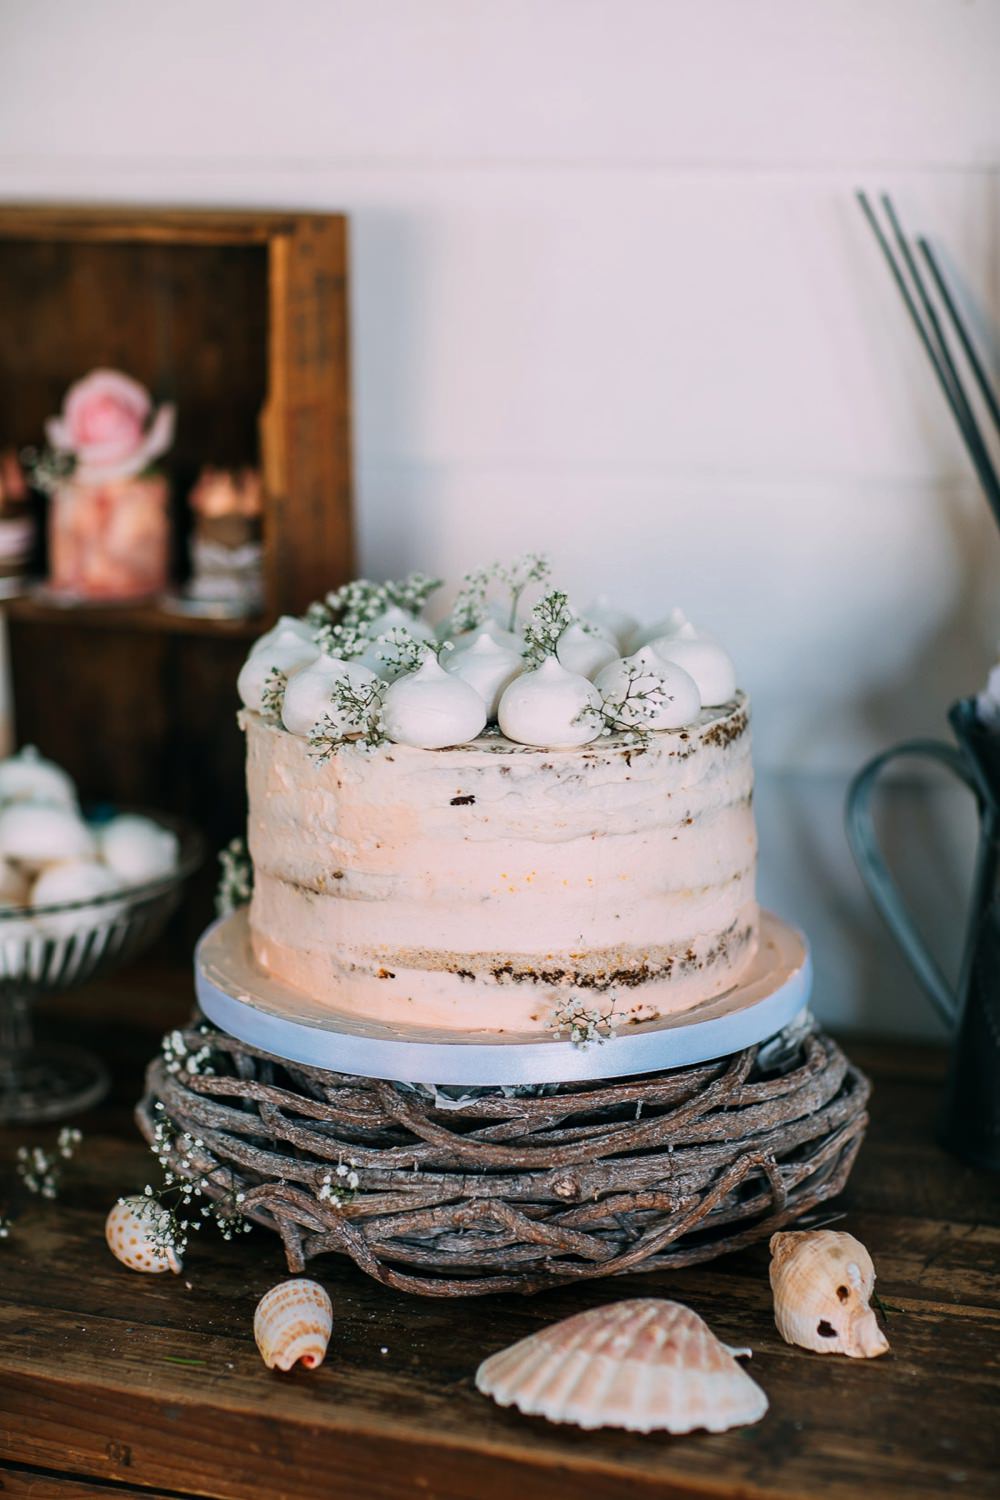 Stunning cake by Kate Burt Cakes